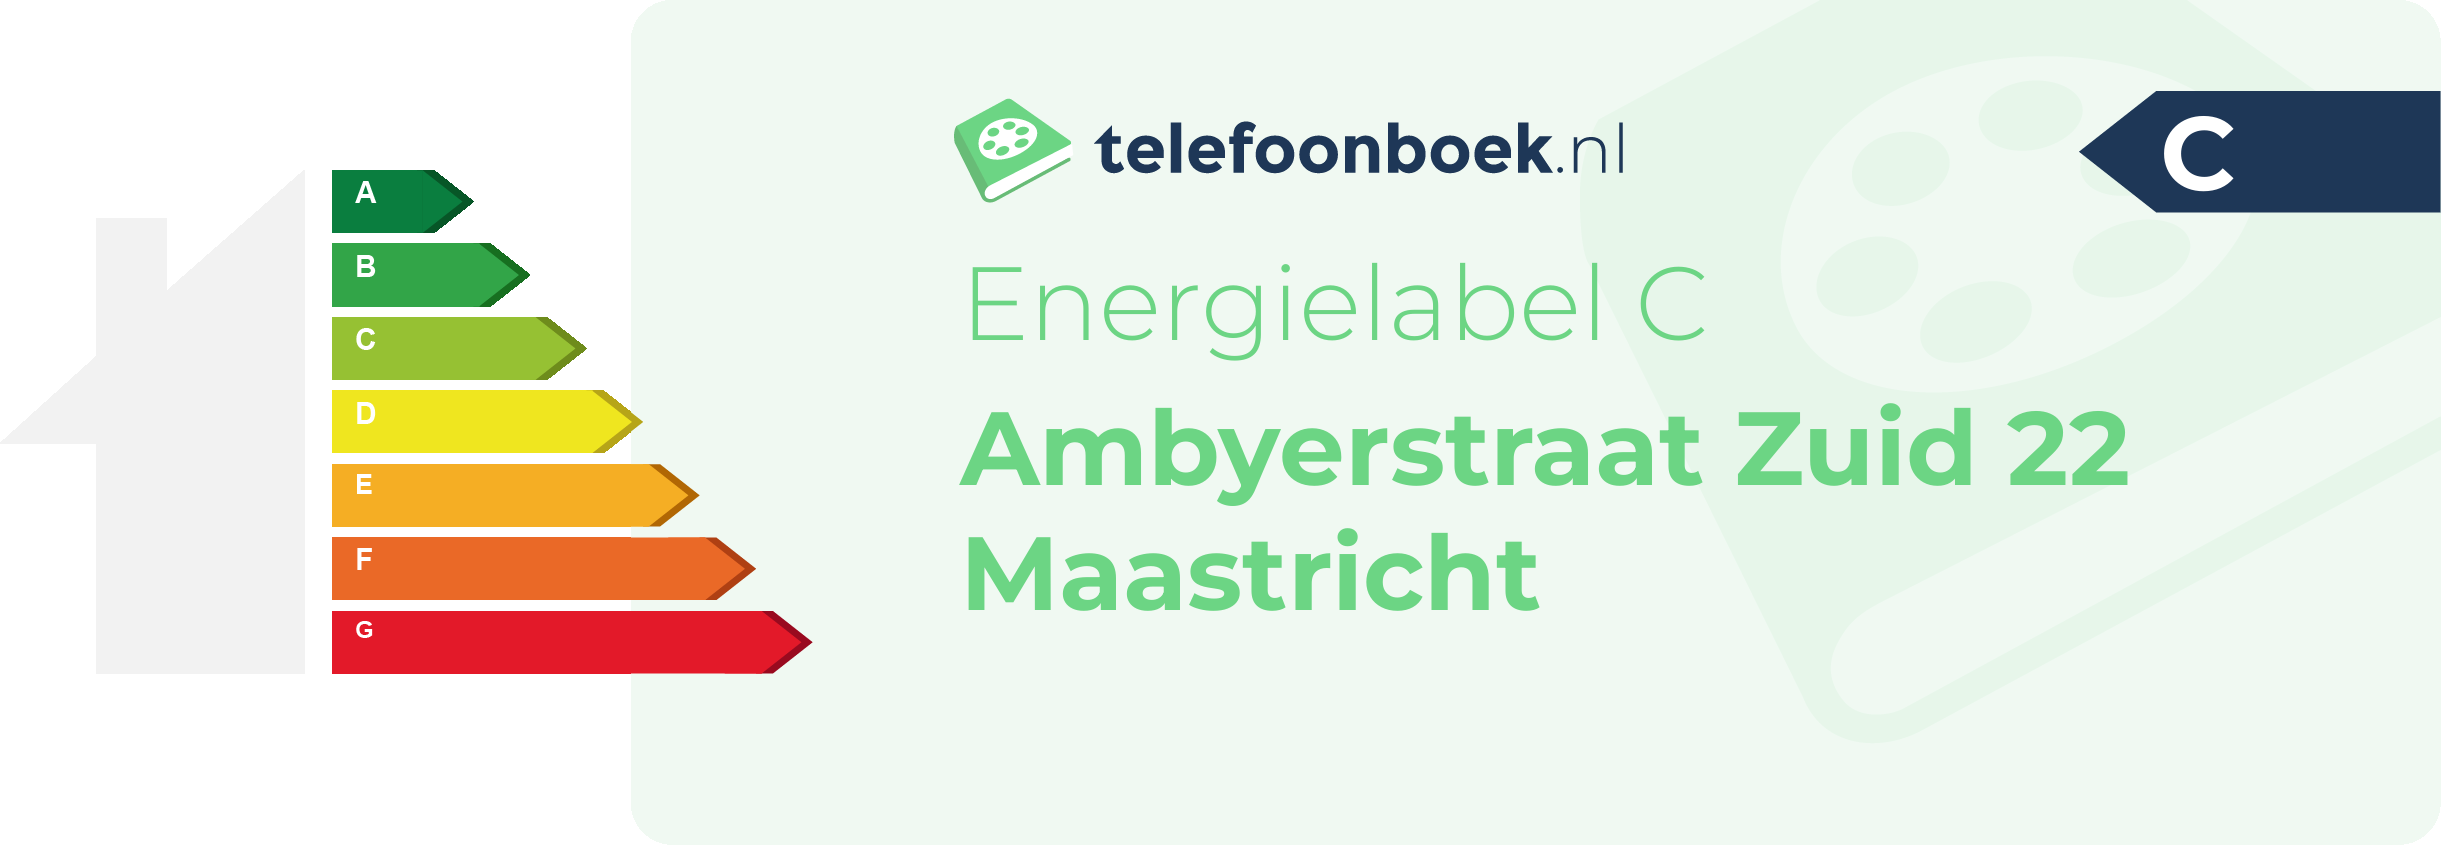 Energielabel Ambyerstraat Zuid 22 Maastricht